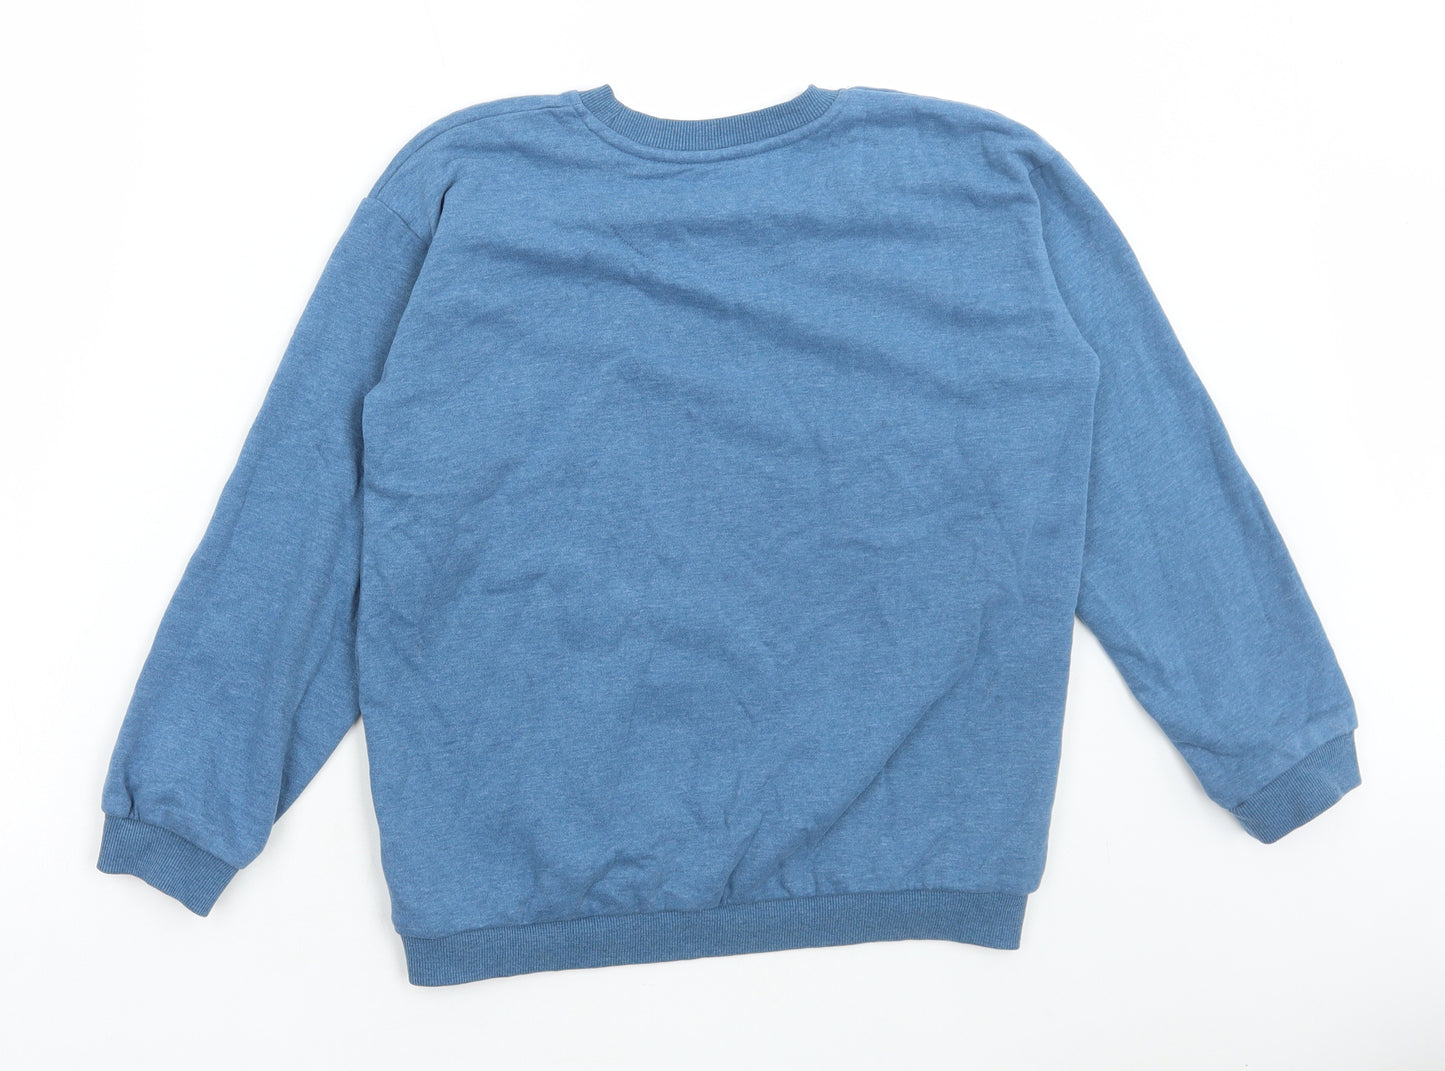 Nutmeg Boys Blue Cotton Pullover Sweatshirt Size 11-12 Years Pullover